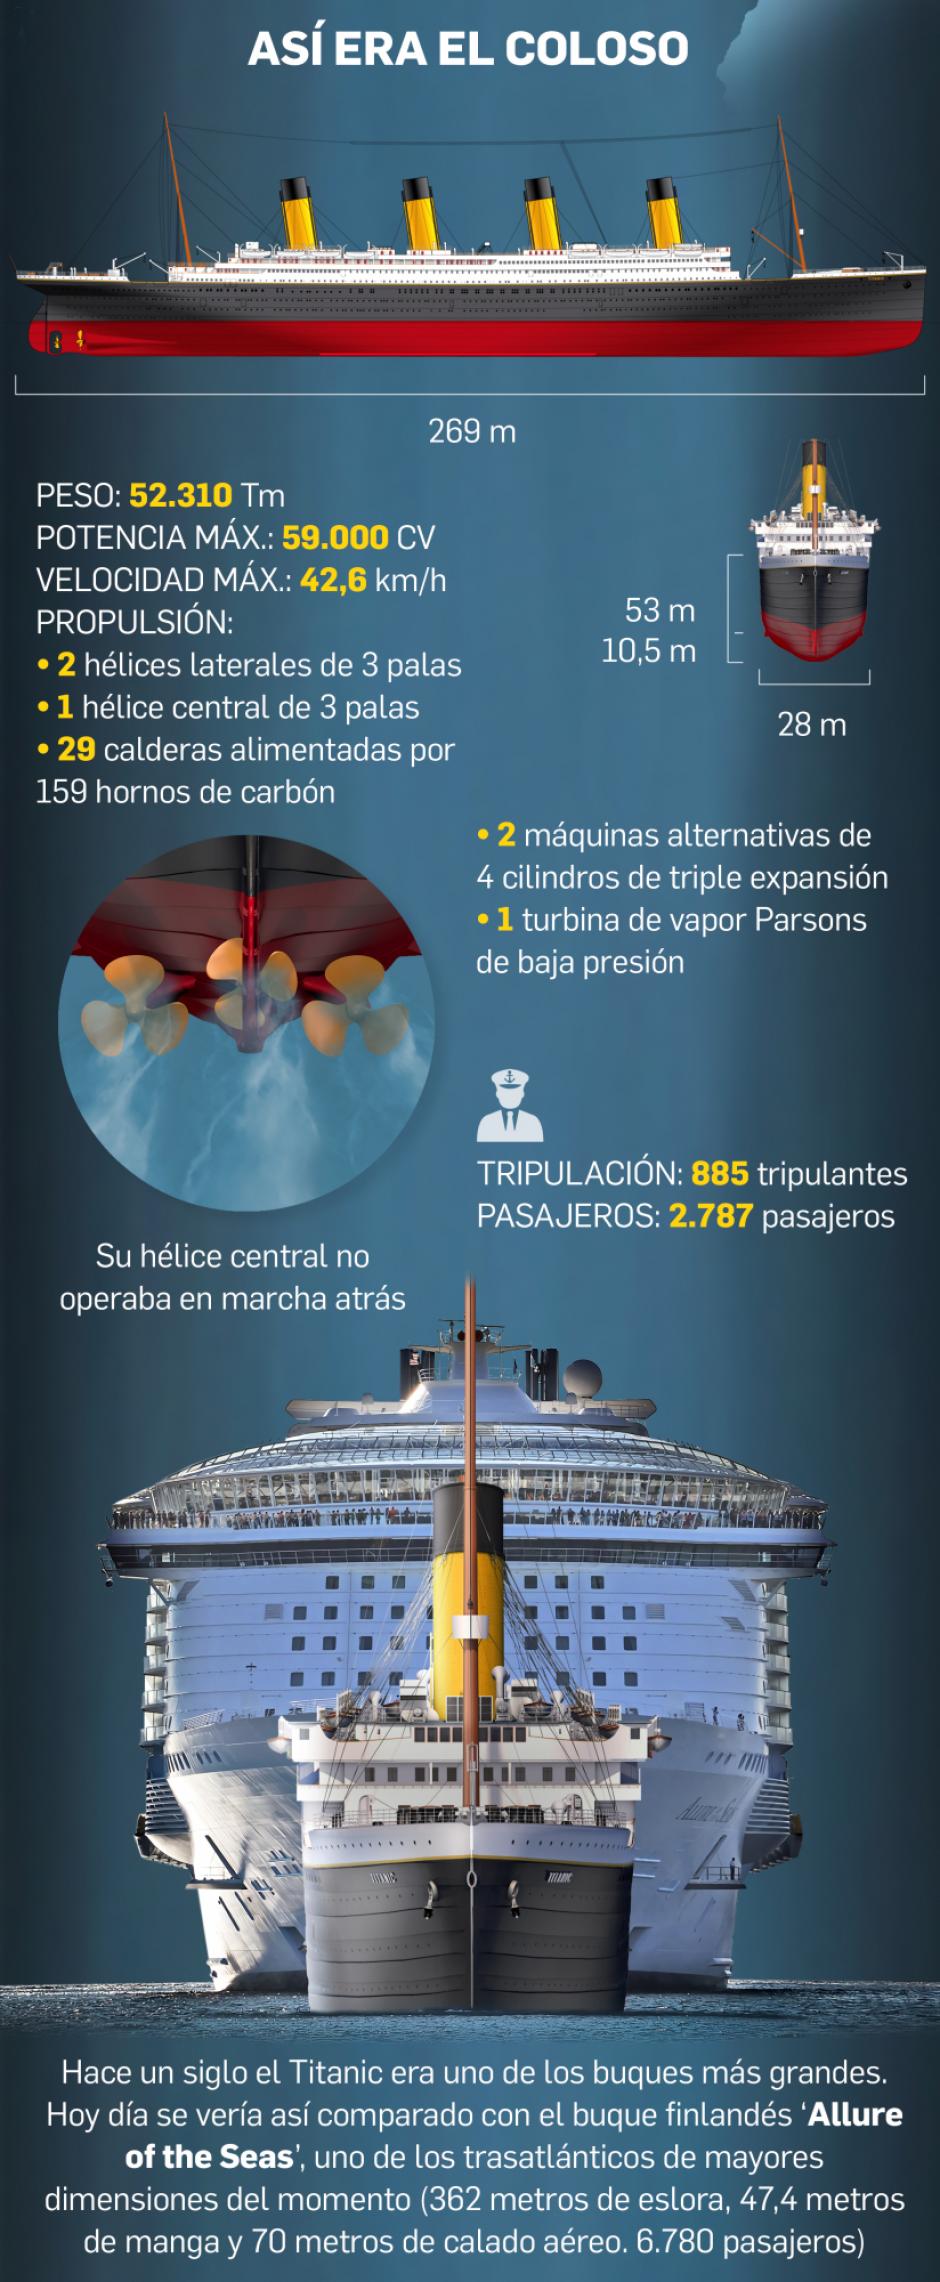 Infografía: 110 aniversario de la tragedia del Titanic